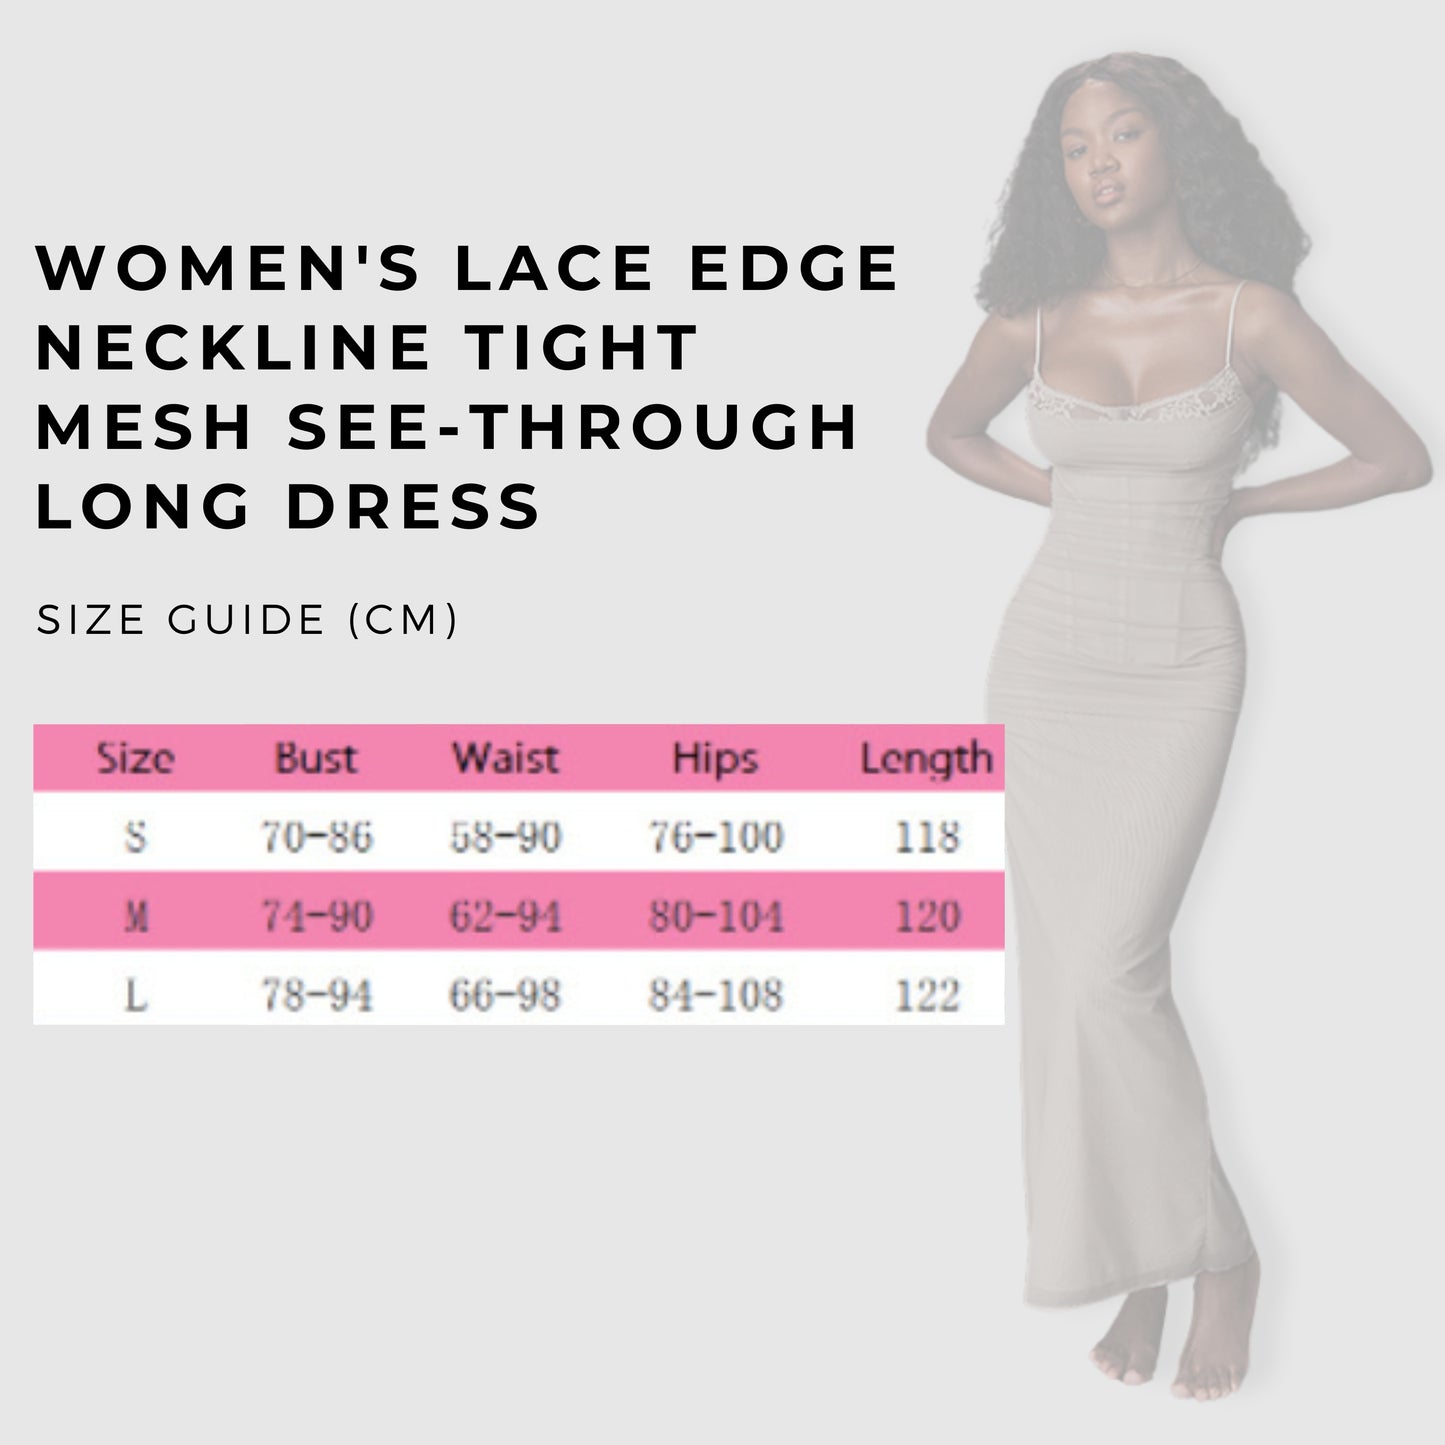 Women's Lace Edge Neckline Tight Mesh See-through Long Dress